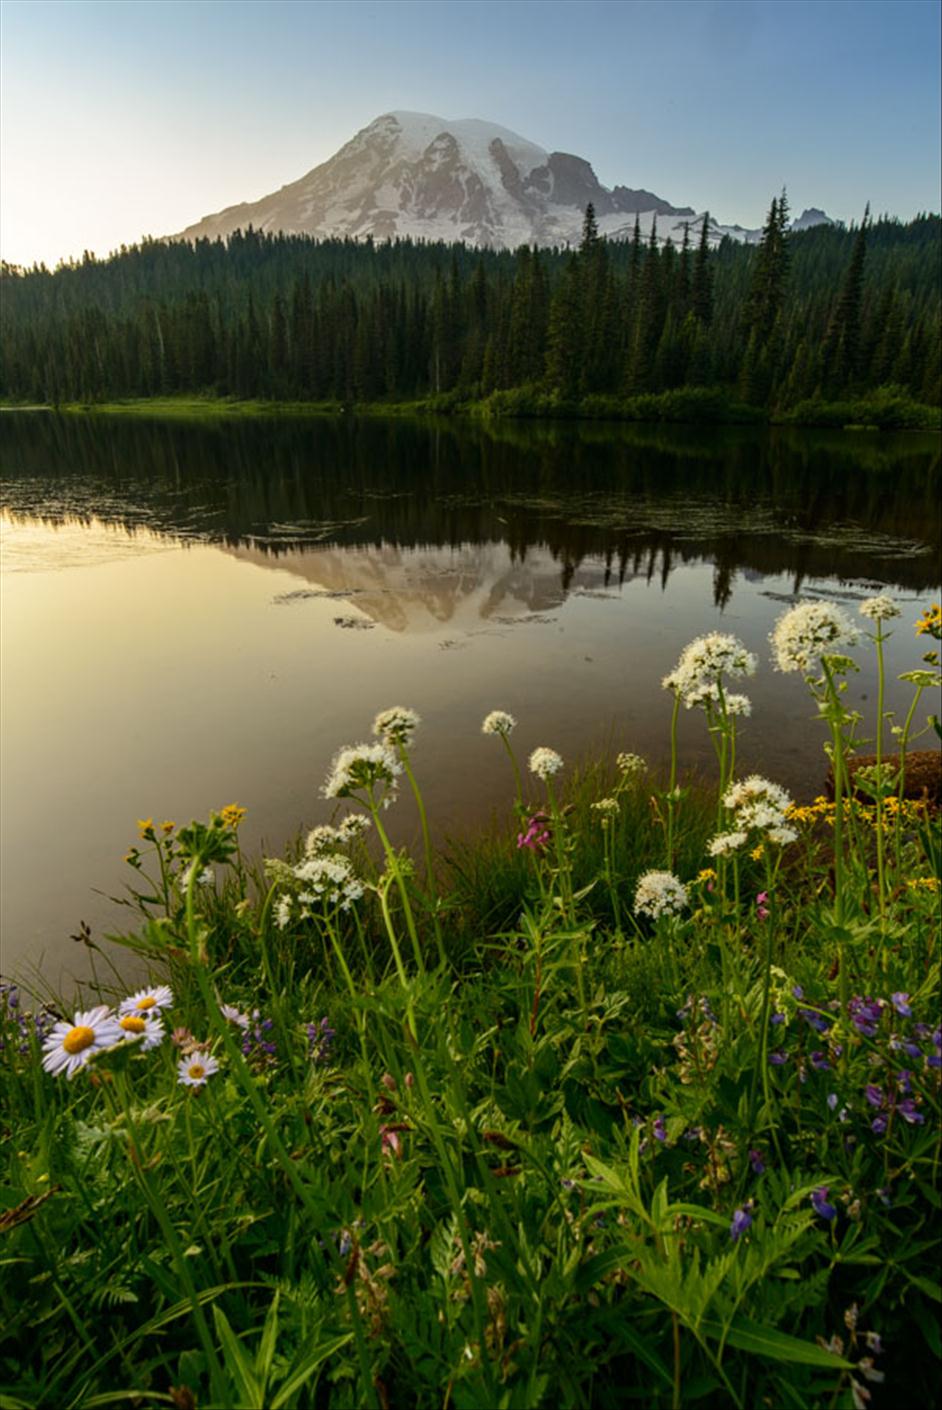 Mount Rainier Wildflowers// Matt Kloskowski's Top 5 Landscapes to Photography // Nations Photo Lab